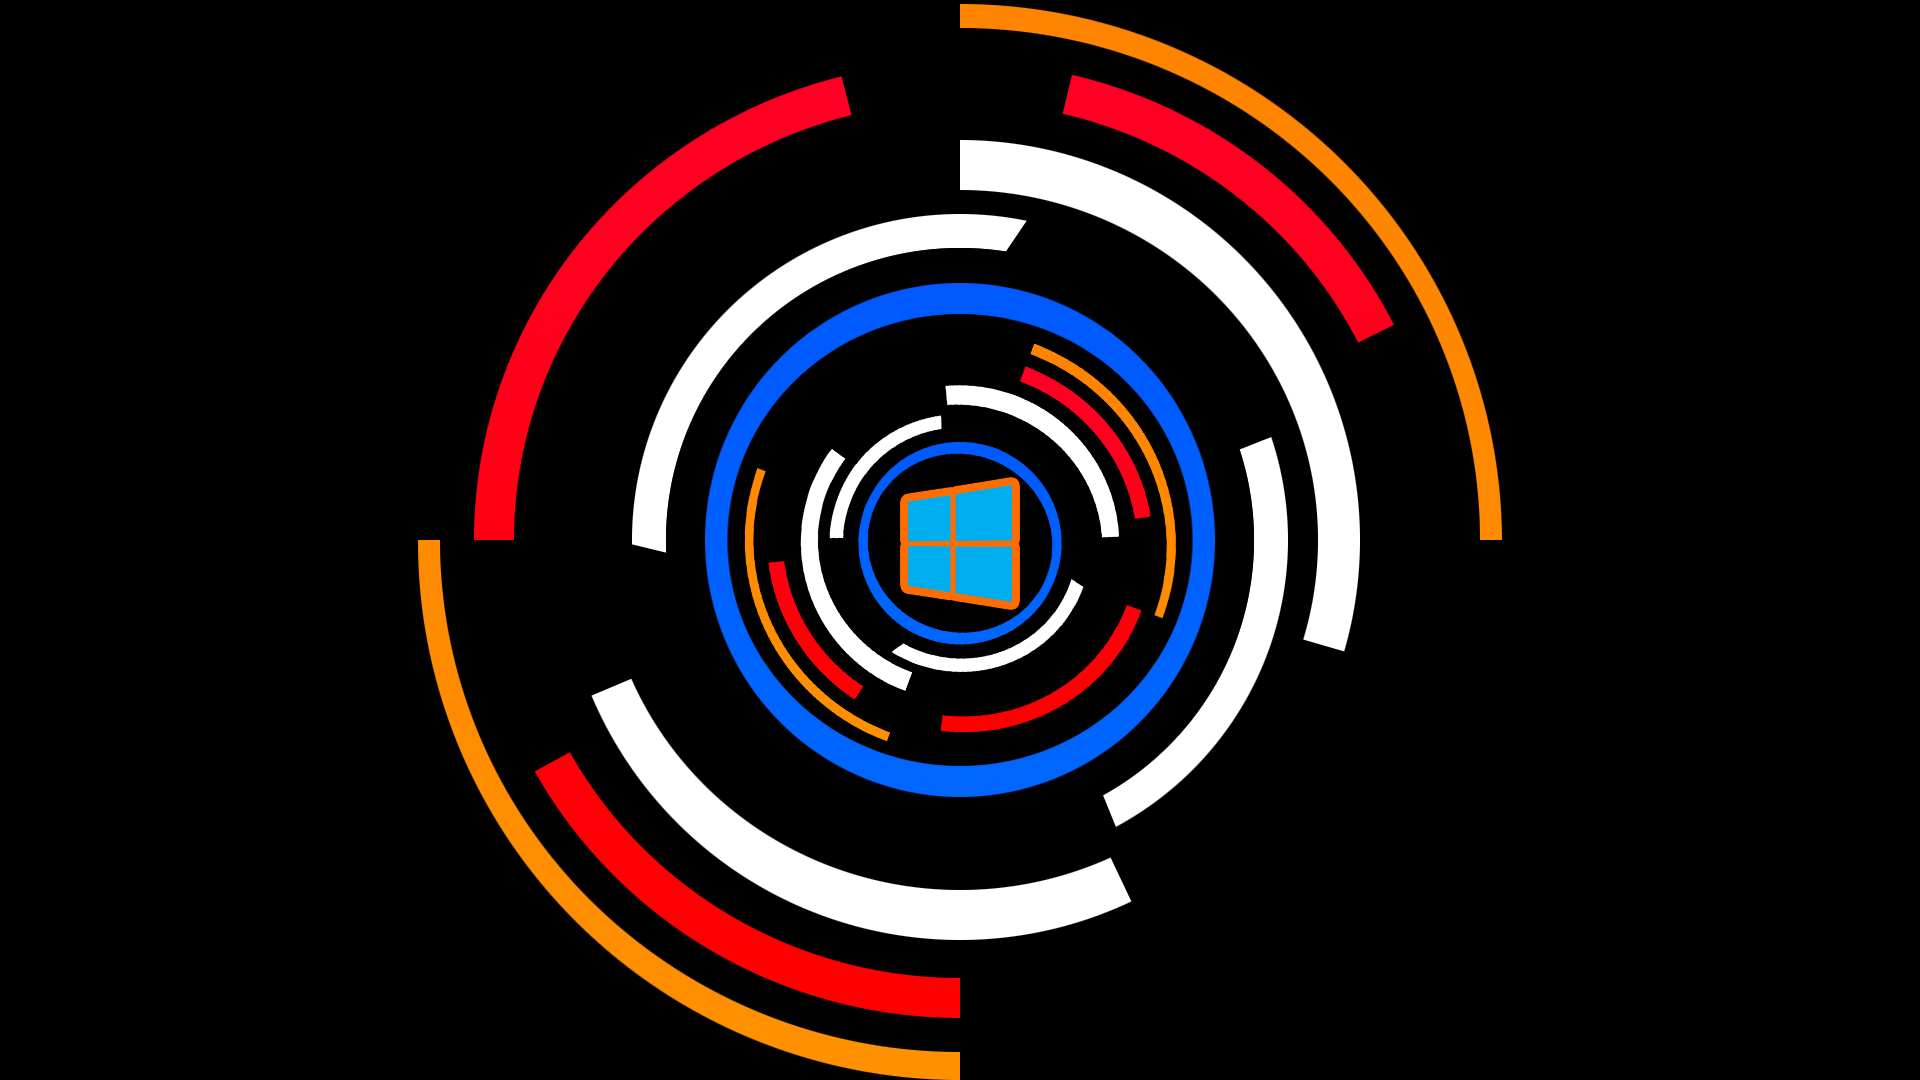 Windows 10 Techno Colorful Digital Art Logo 1920x1080